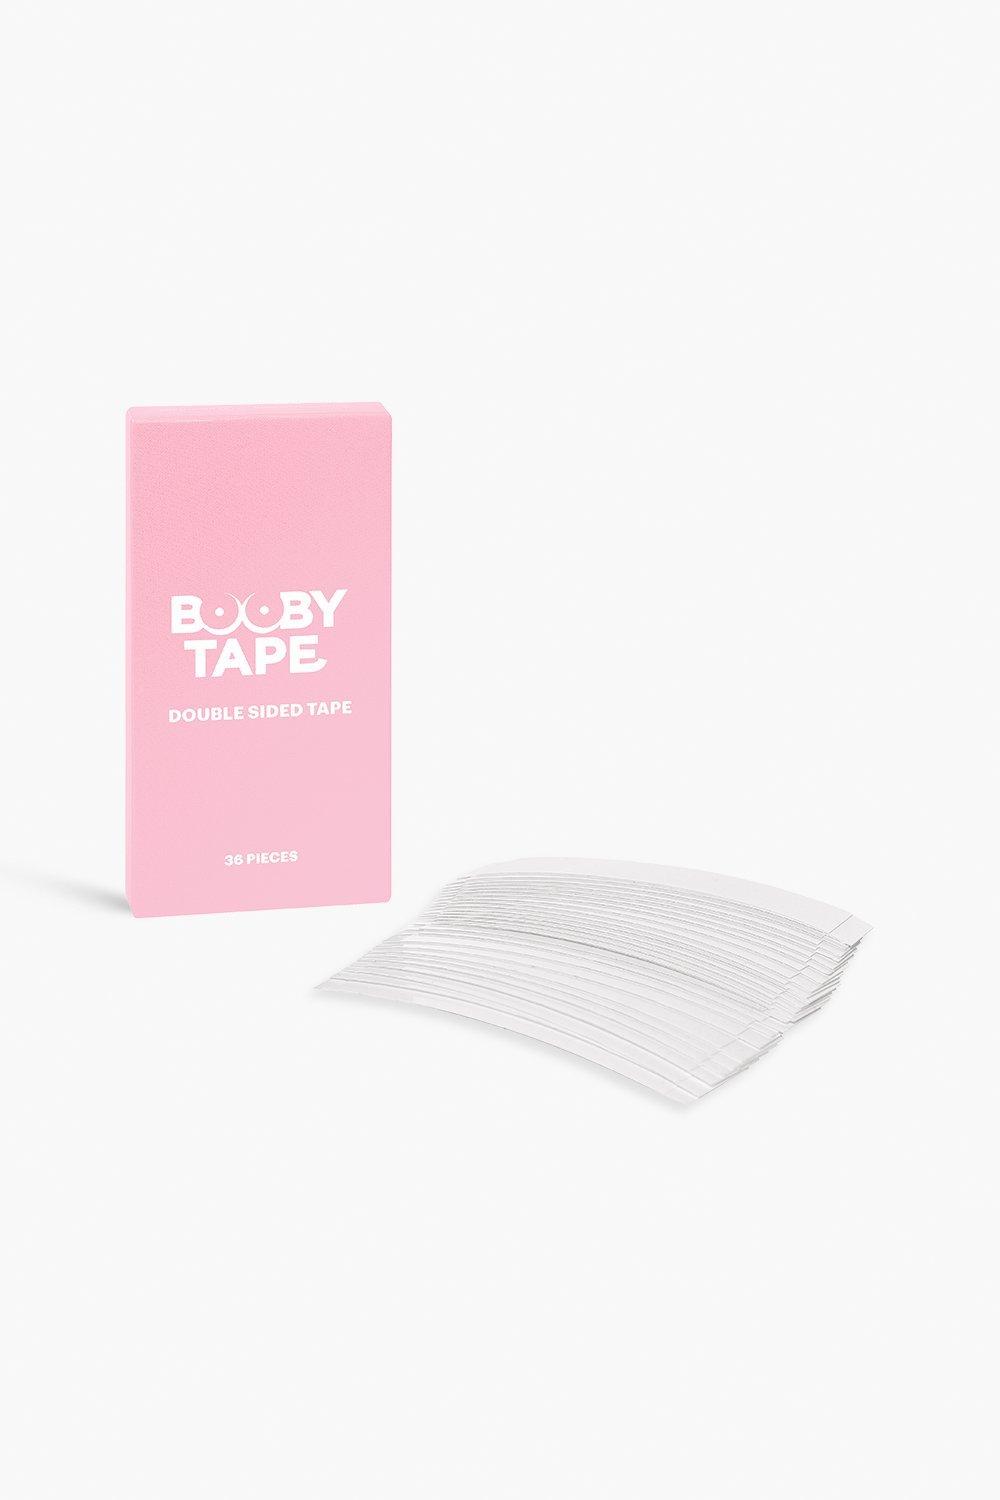 Dubbelzijdige Booby Tape - 36 Stuks, Pink